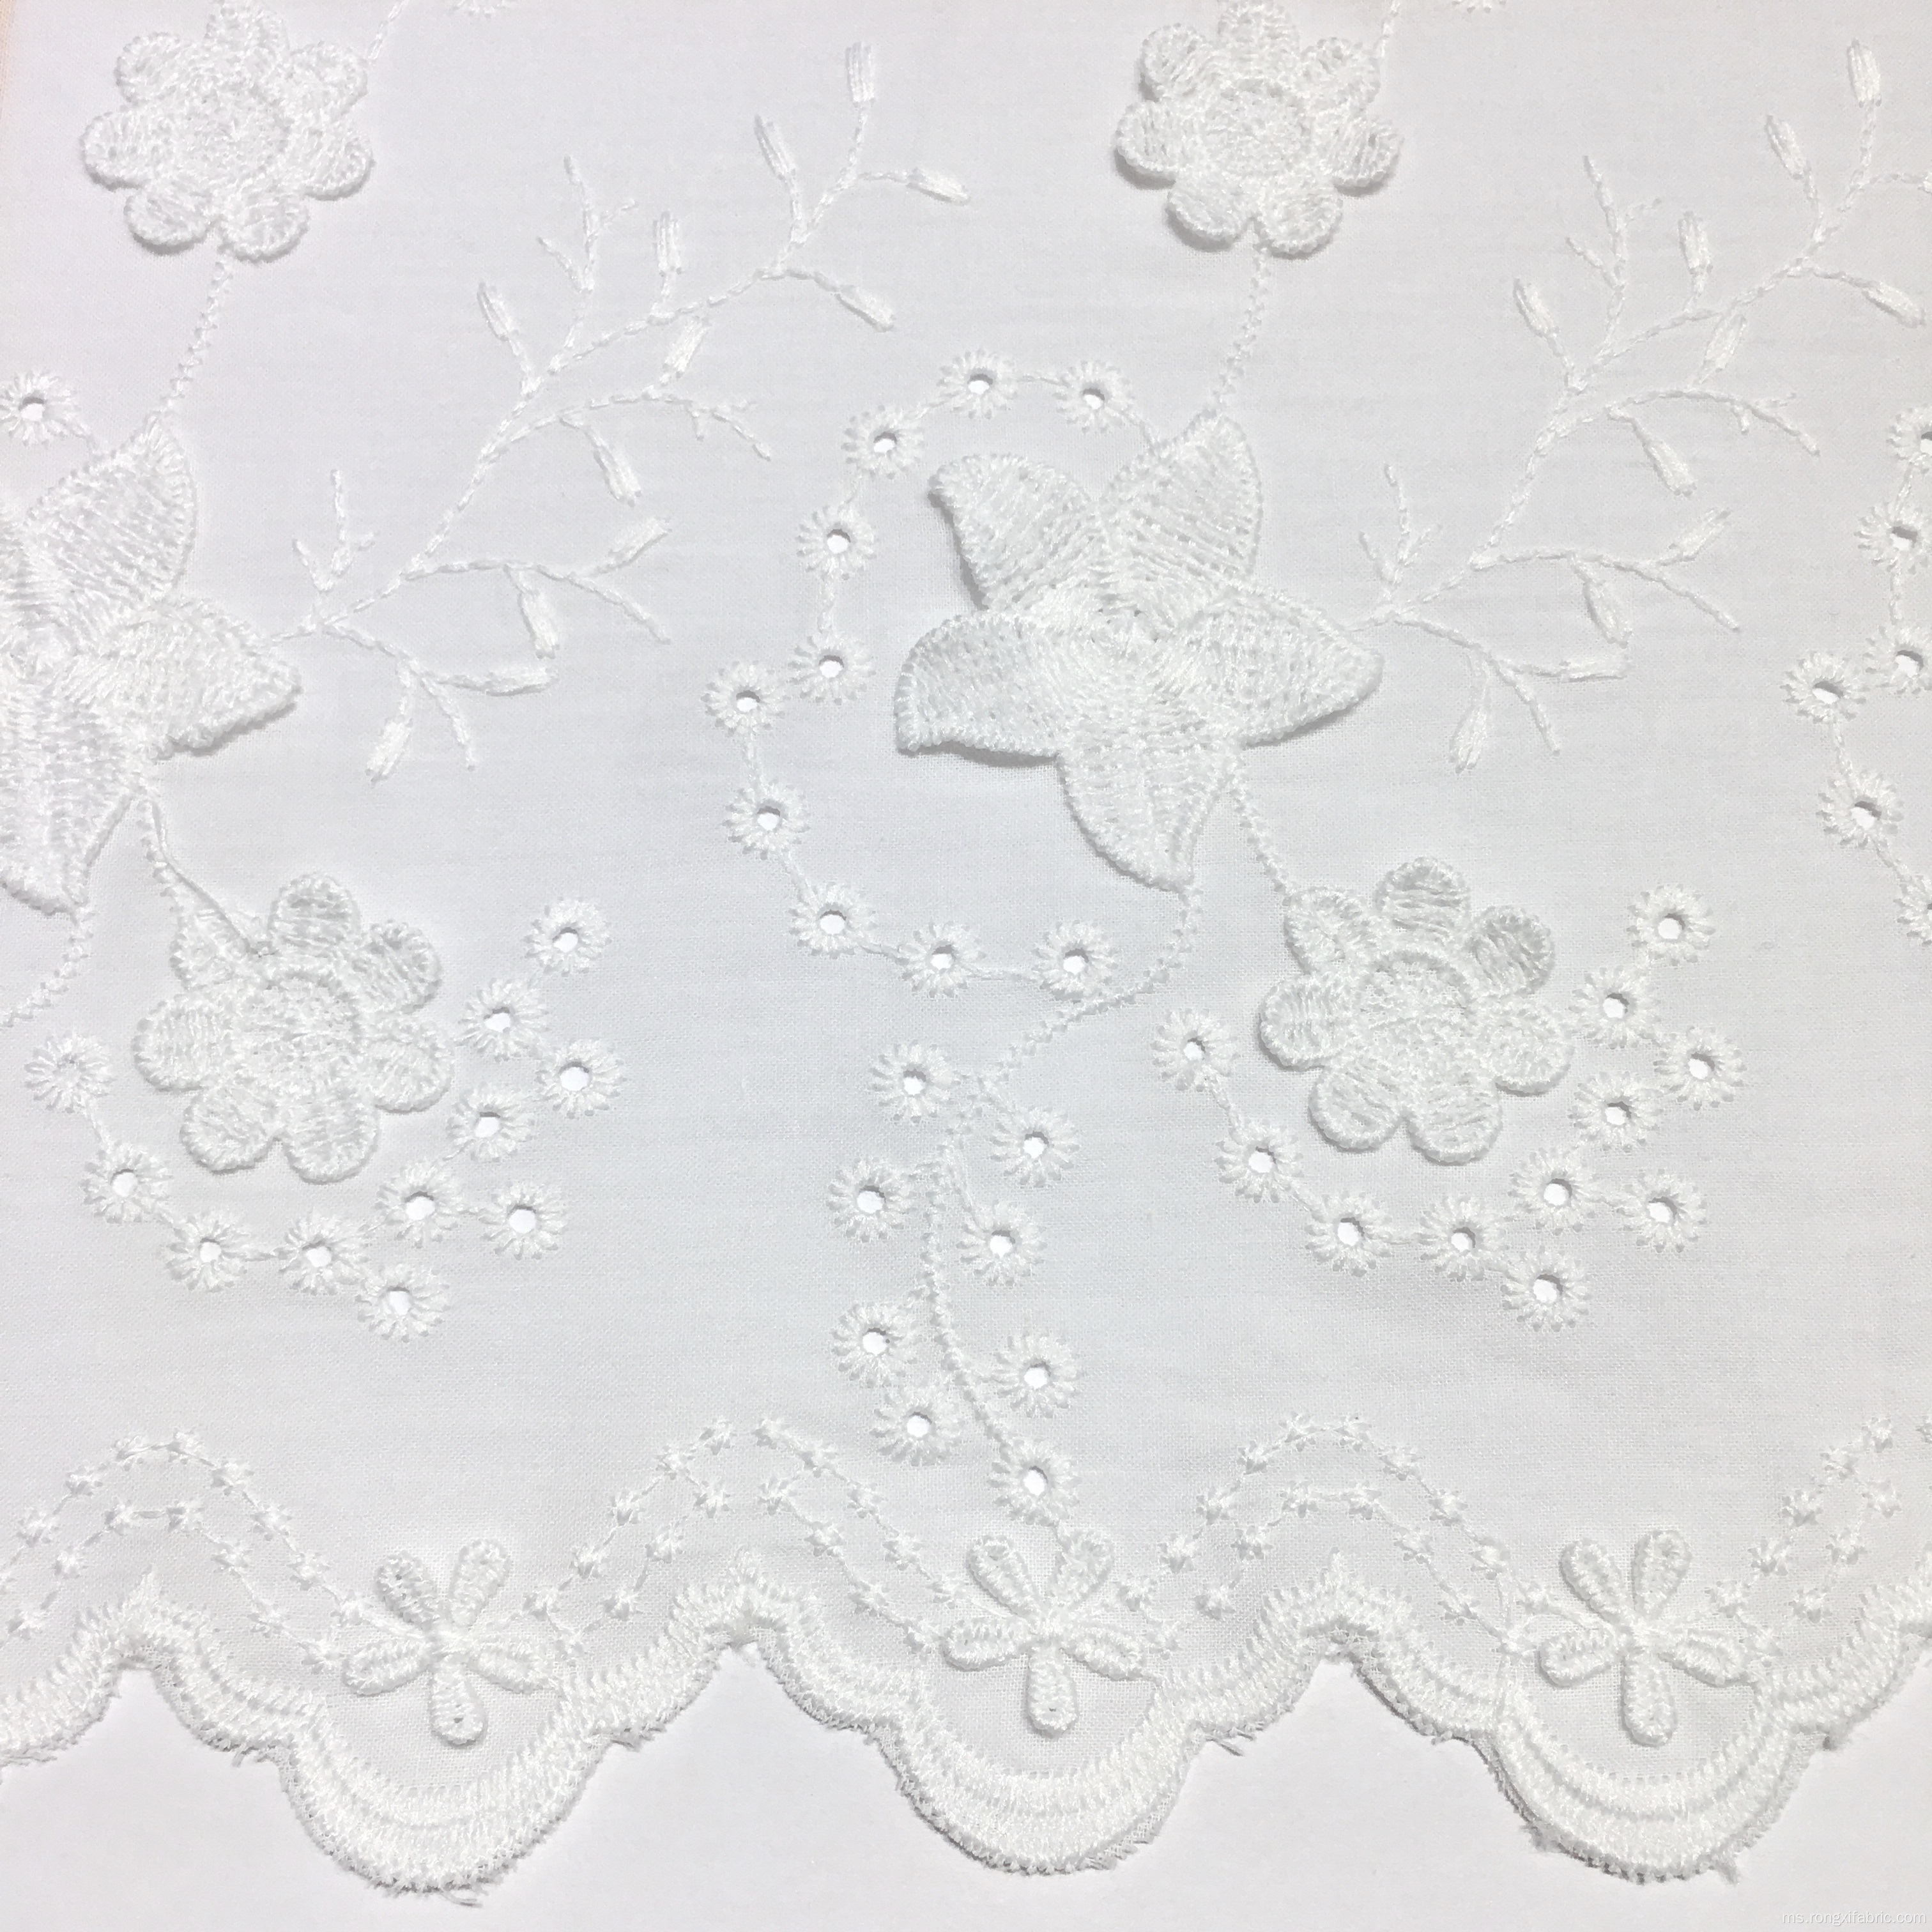 sulaman kapas beige kain renda 3d putih